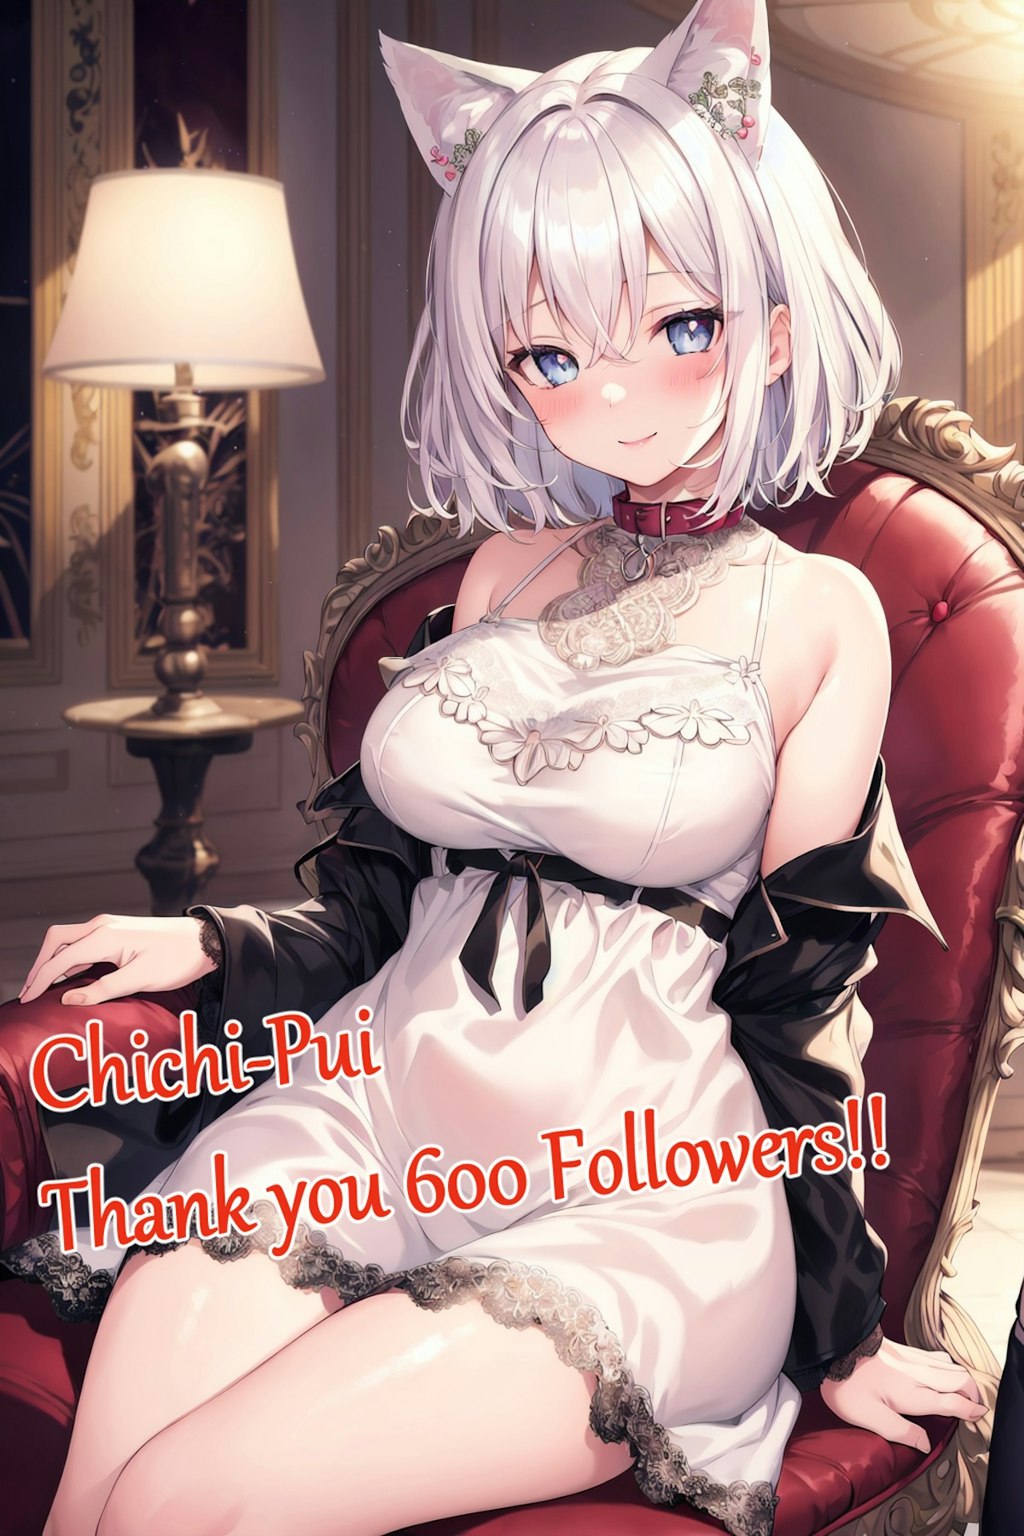 Thank you 600 followers!!